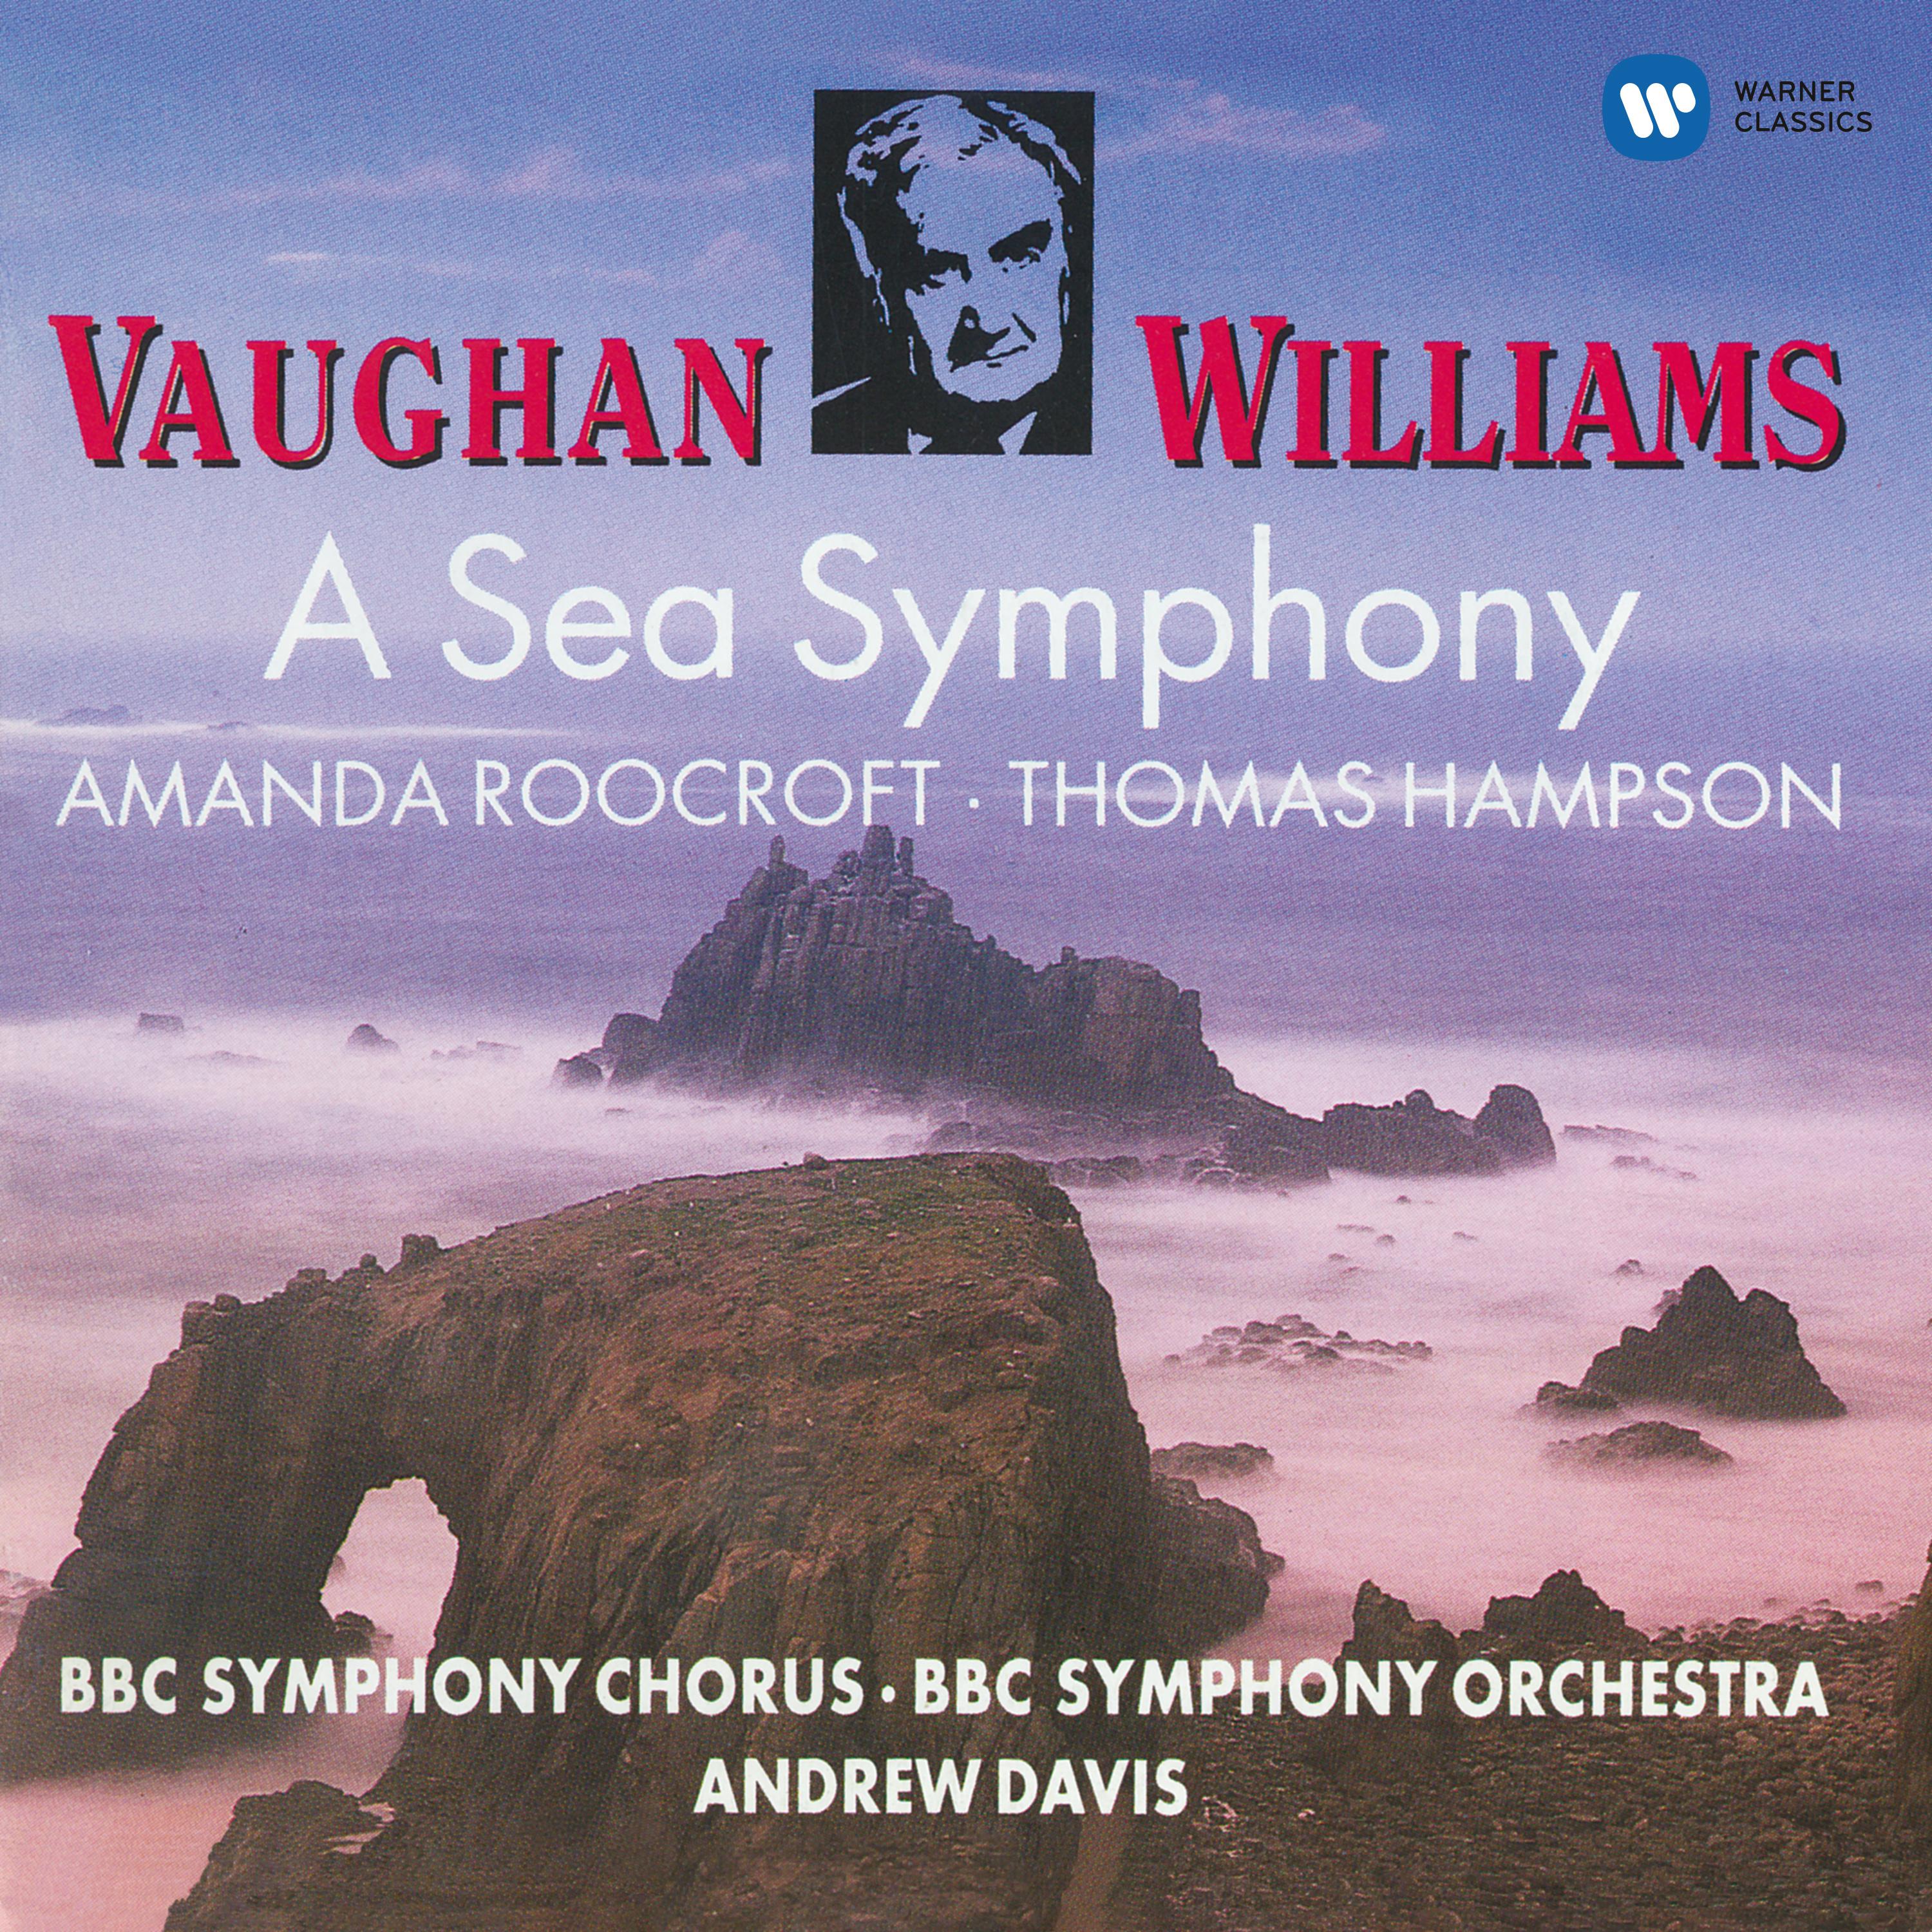 Symphony No. 1 "A Sea Symphony":III. Scherzo. The Waves